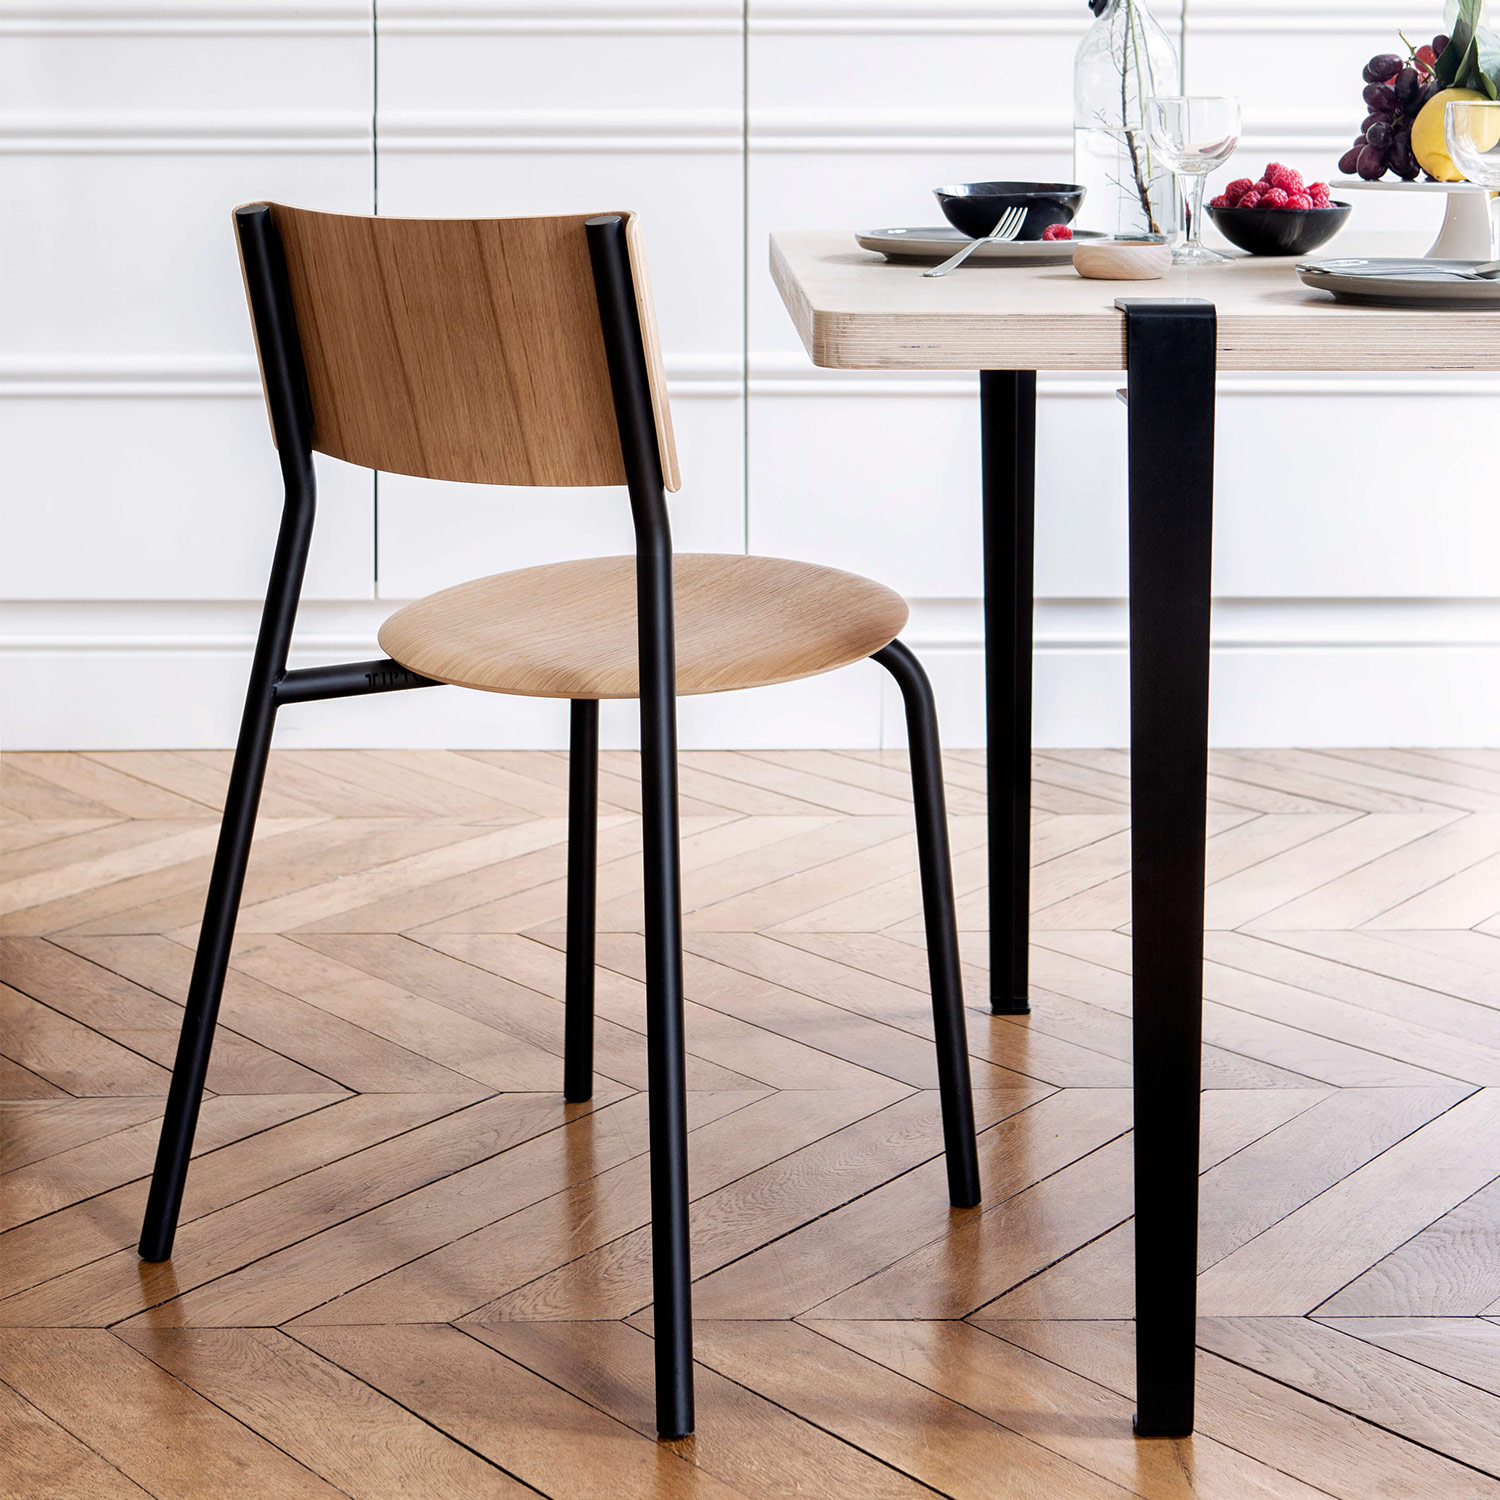 Set of 4 table legs - 75cm